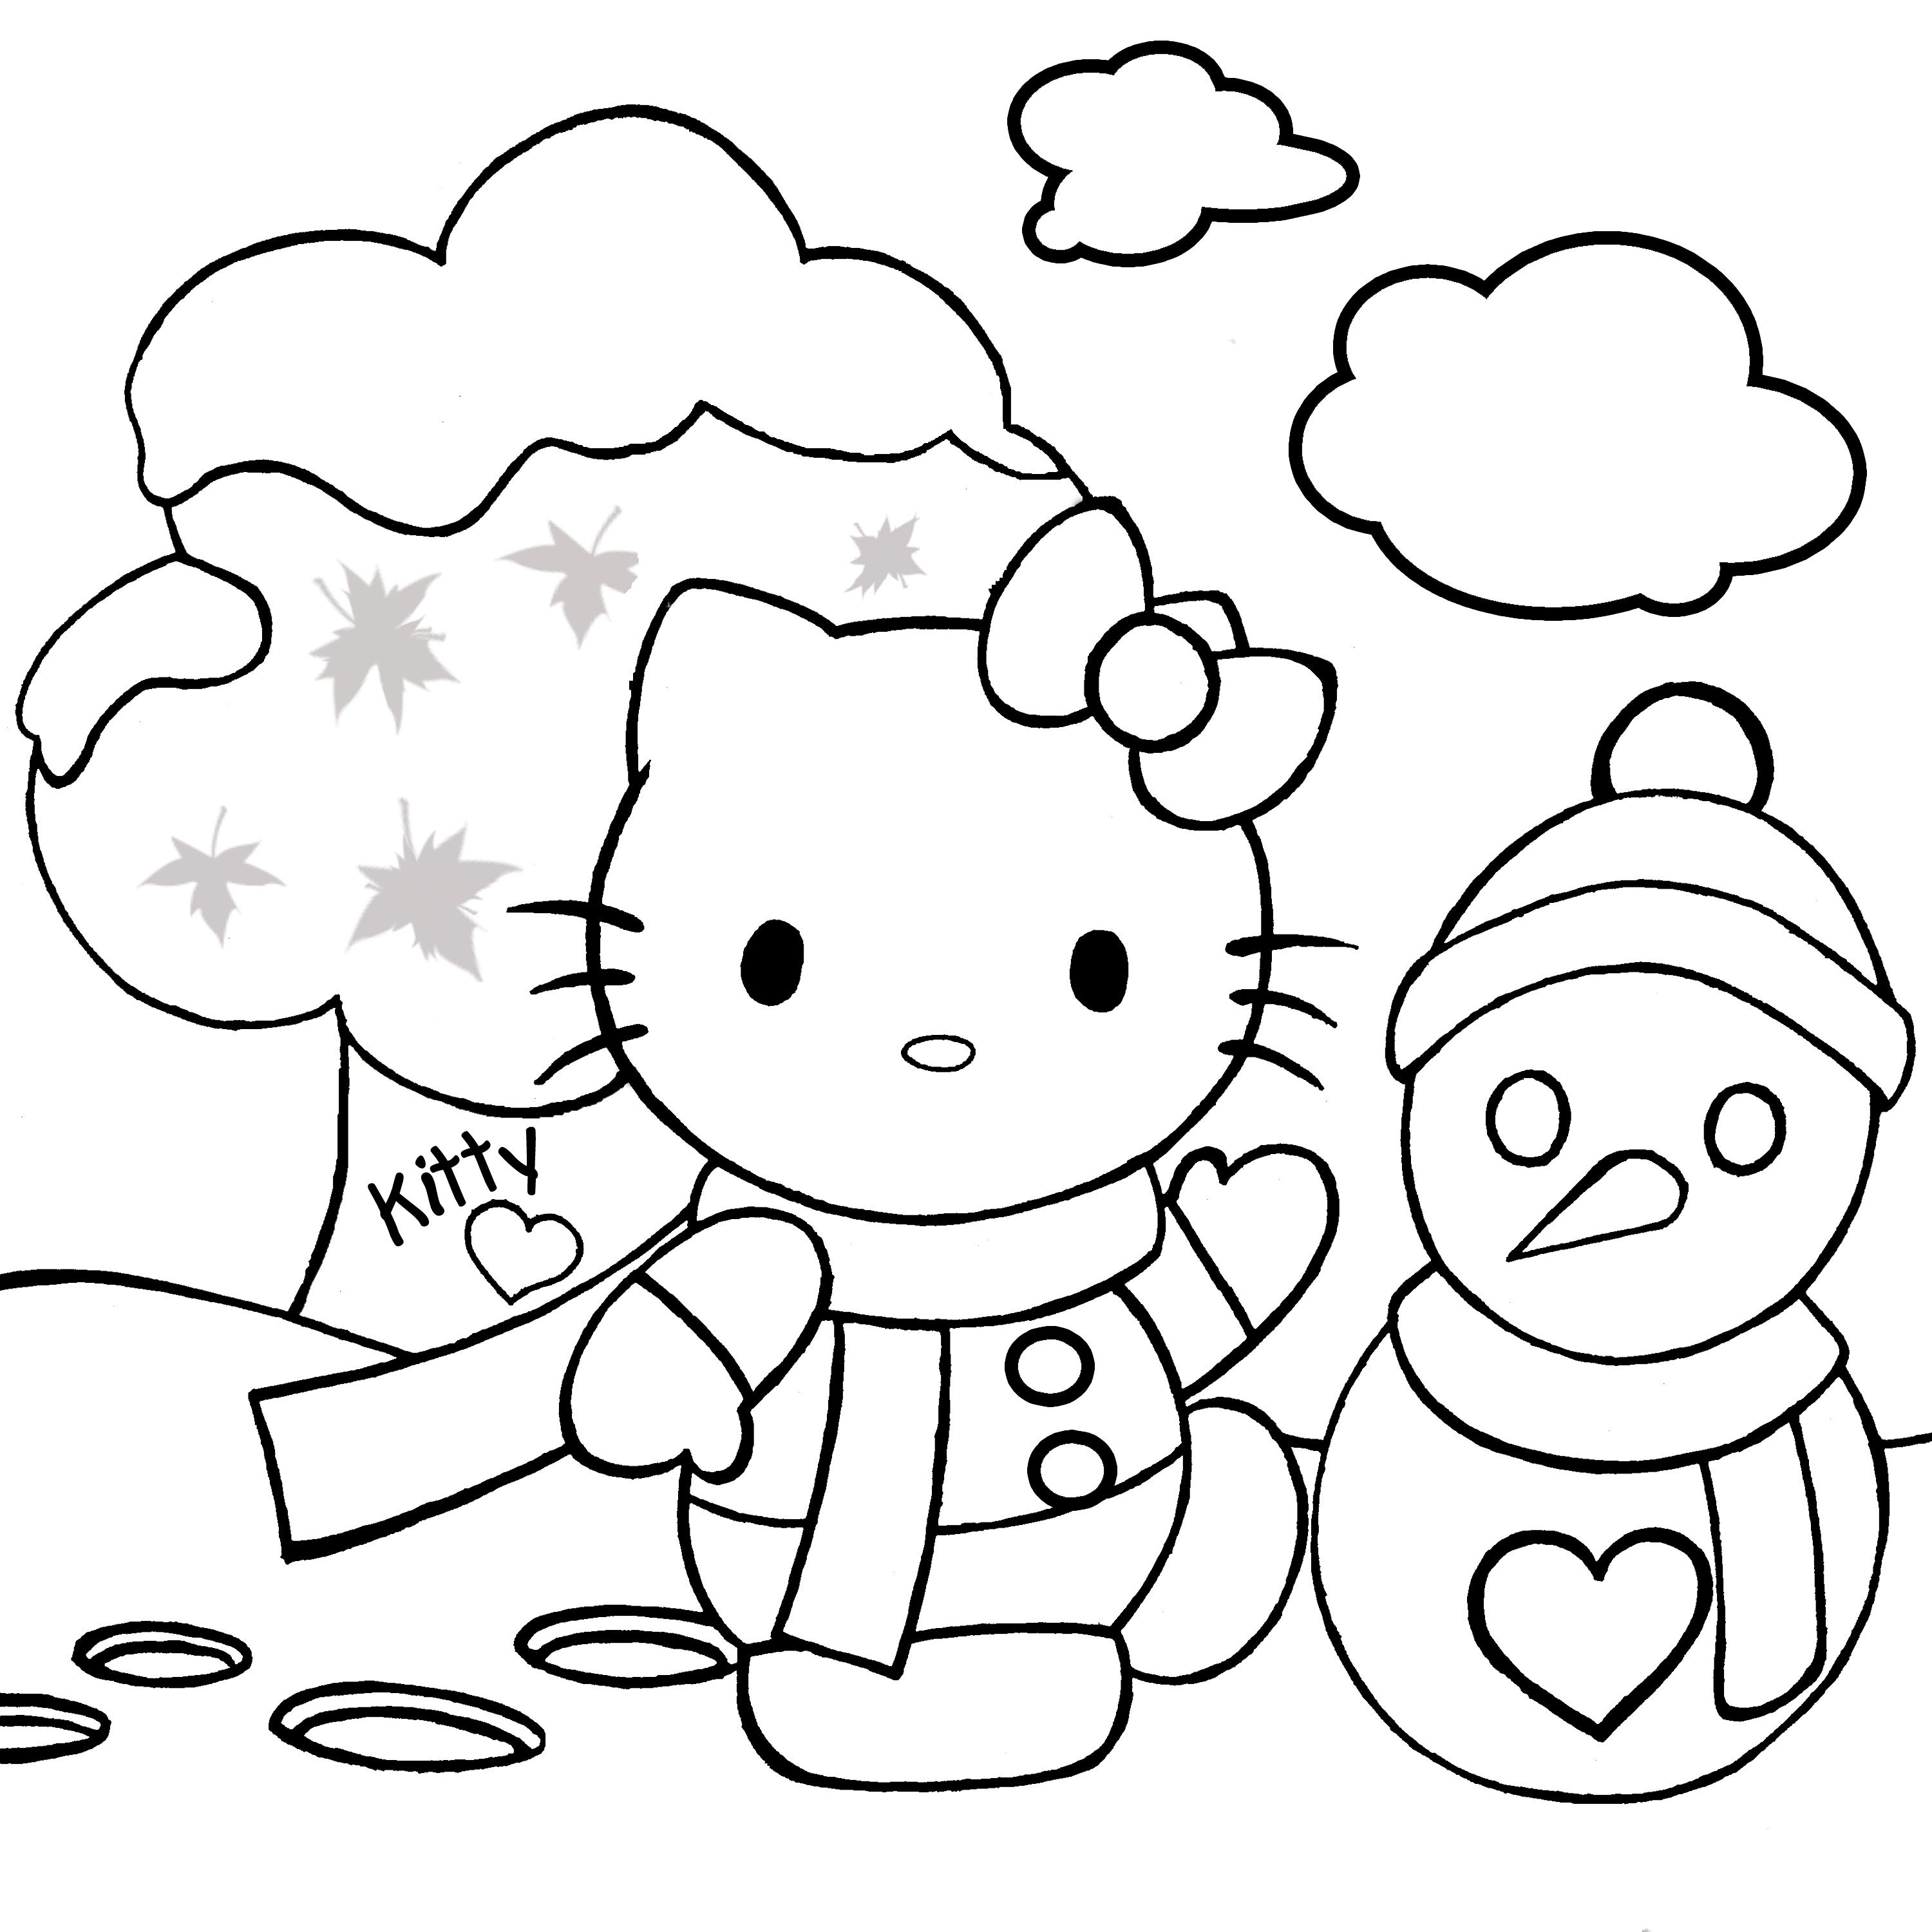 Hello Kitty Coloring Pages - printable - pages Ã  colorier - Ñ€Ð°ÑÐºÑ€Ð°ÑÐºÐ¸ - ØªÙ„ÙˆÙŠÙ† ØµÙØ­Ø§Øª - è‘—è‰²é  - ç€è‰²ãƒšãƒ¼ã‚¸ - halaman mewarnai - #25